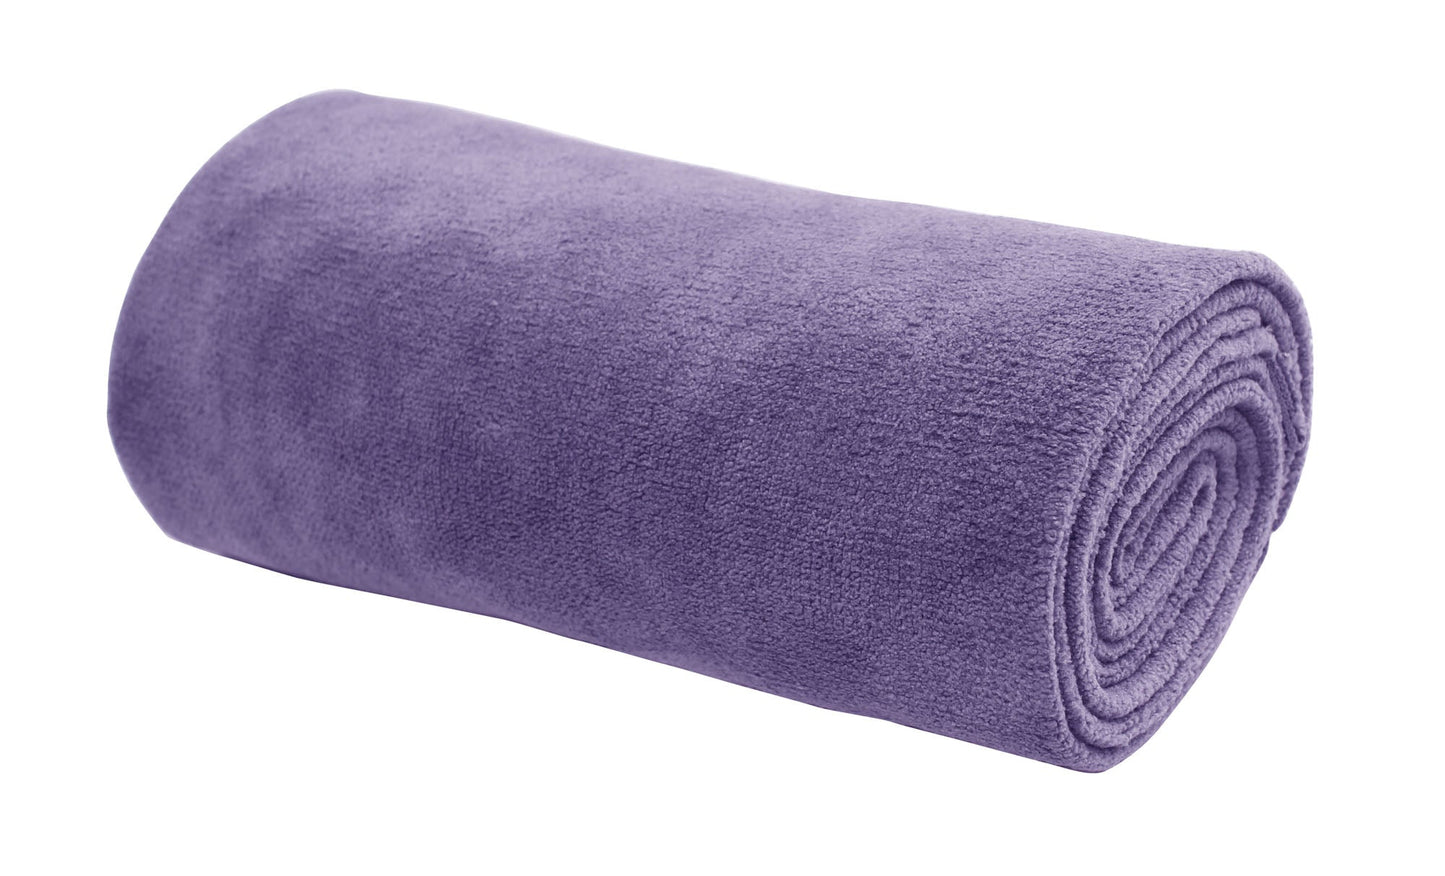 Biospired Asana Yoga Towel, Purple by The Everplush Company